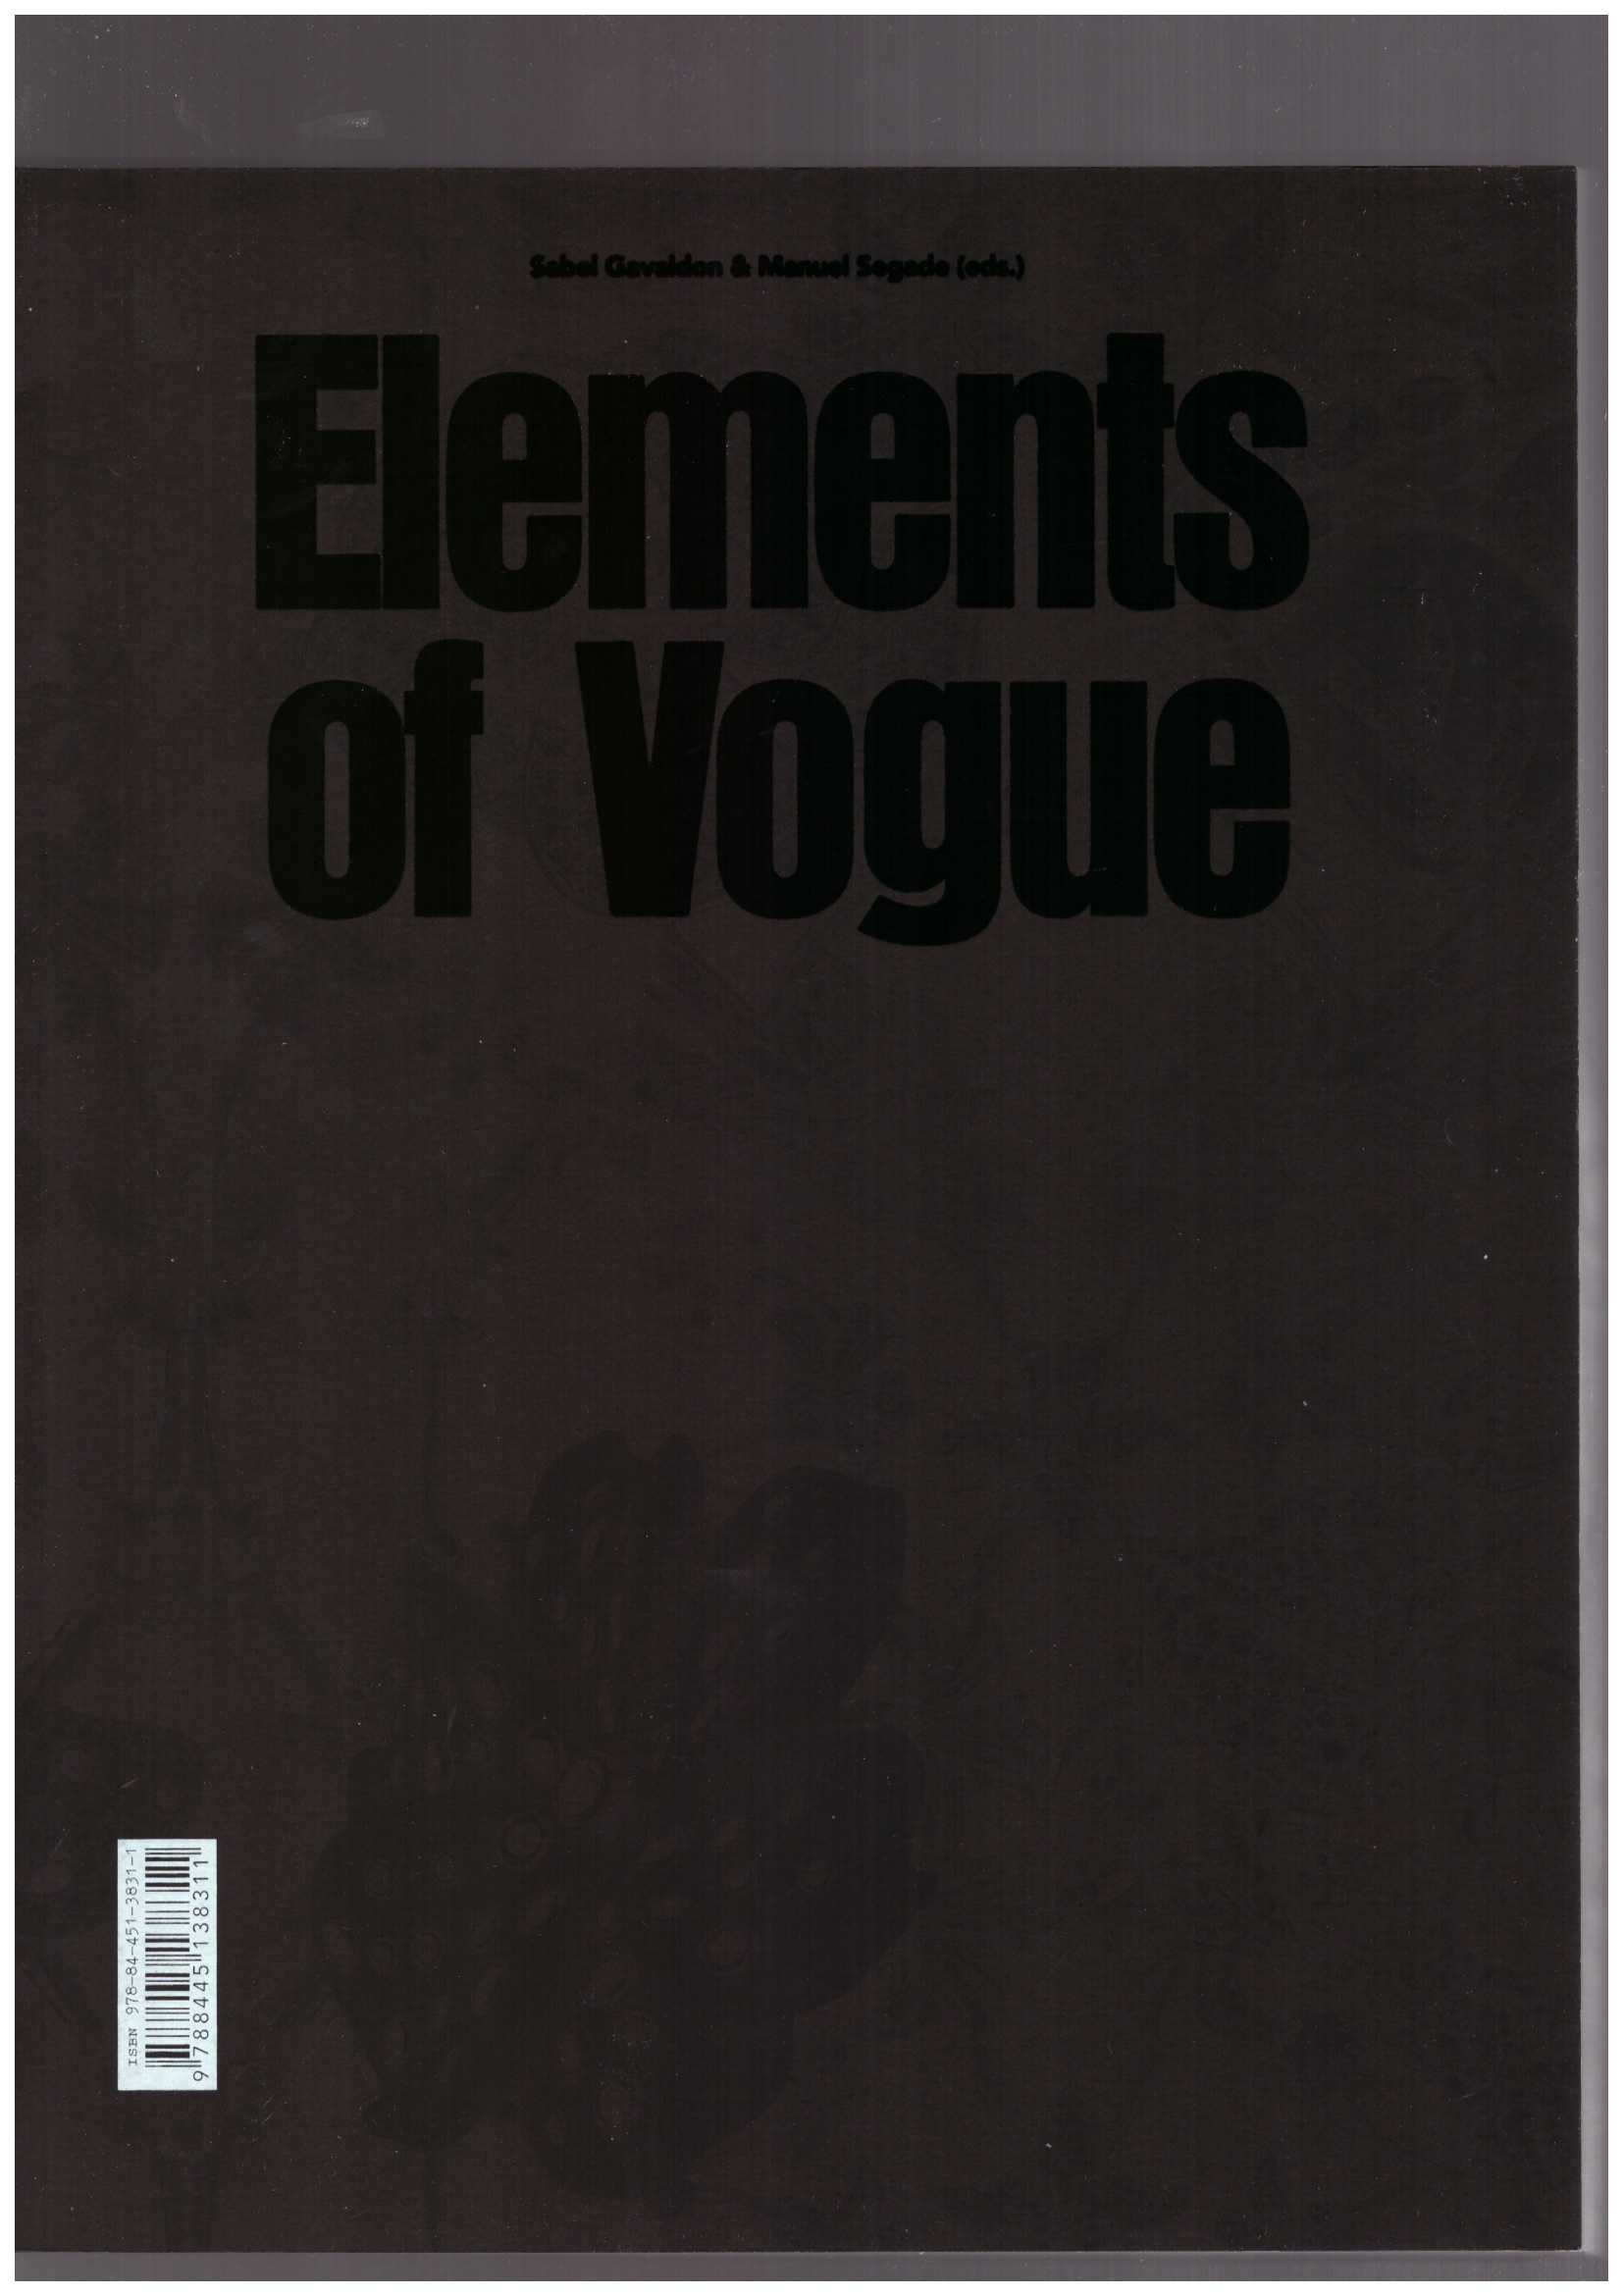 GAVALDON, Sabel Gavaldon; SEGADE, Manuel (eds.) - Elements of Vogue